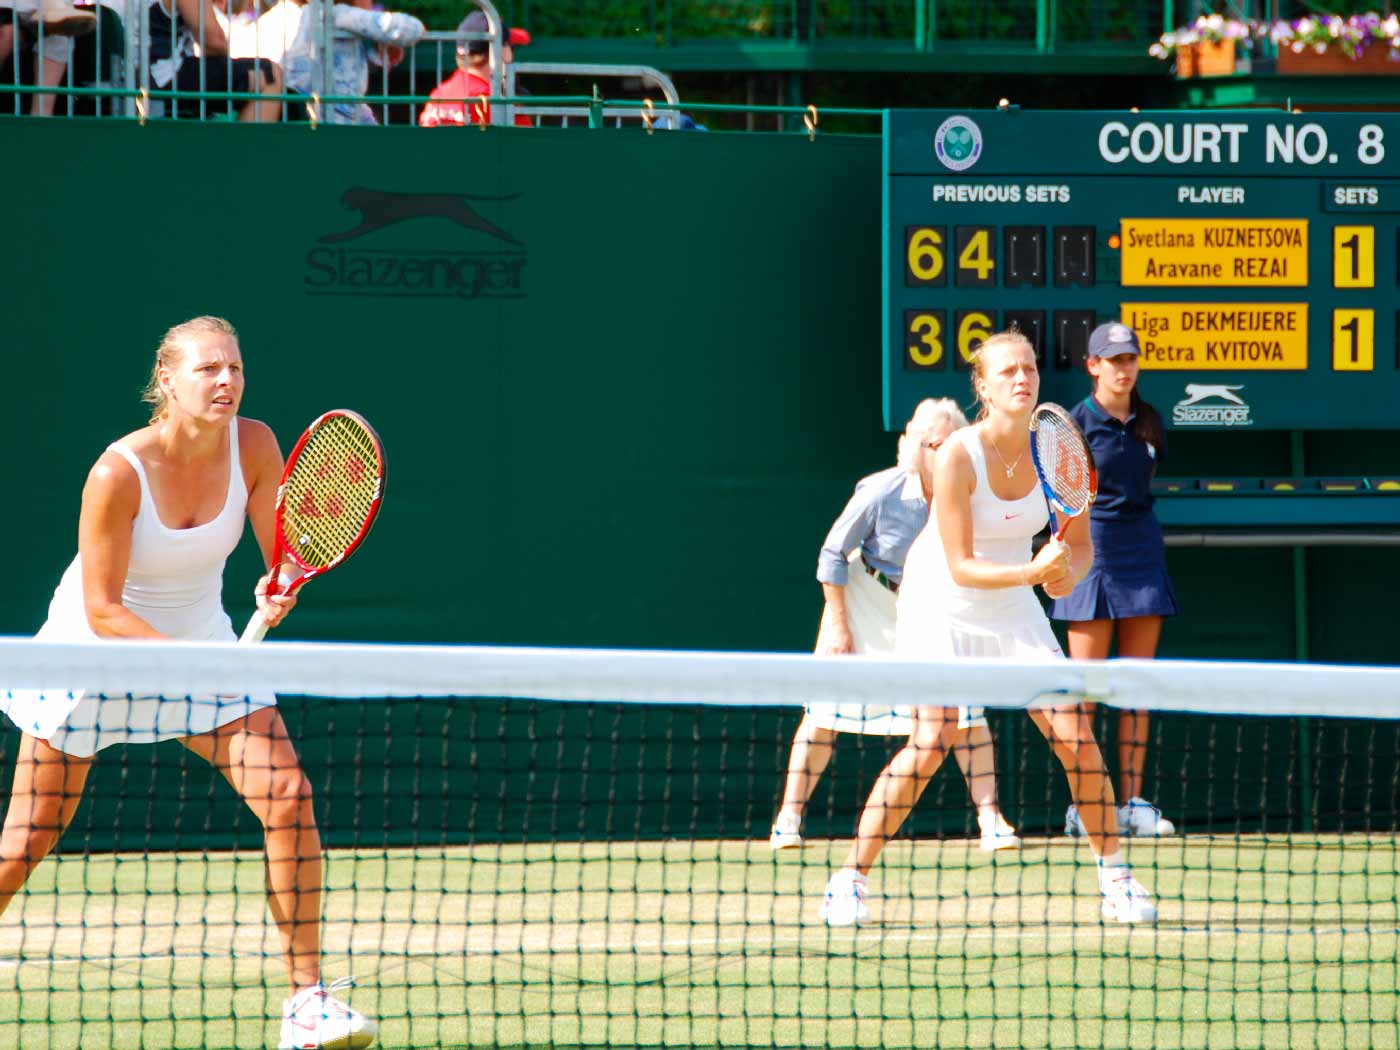 Liga Dekmeijere and Petra Kvitova playing doubles at Wimbledon.